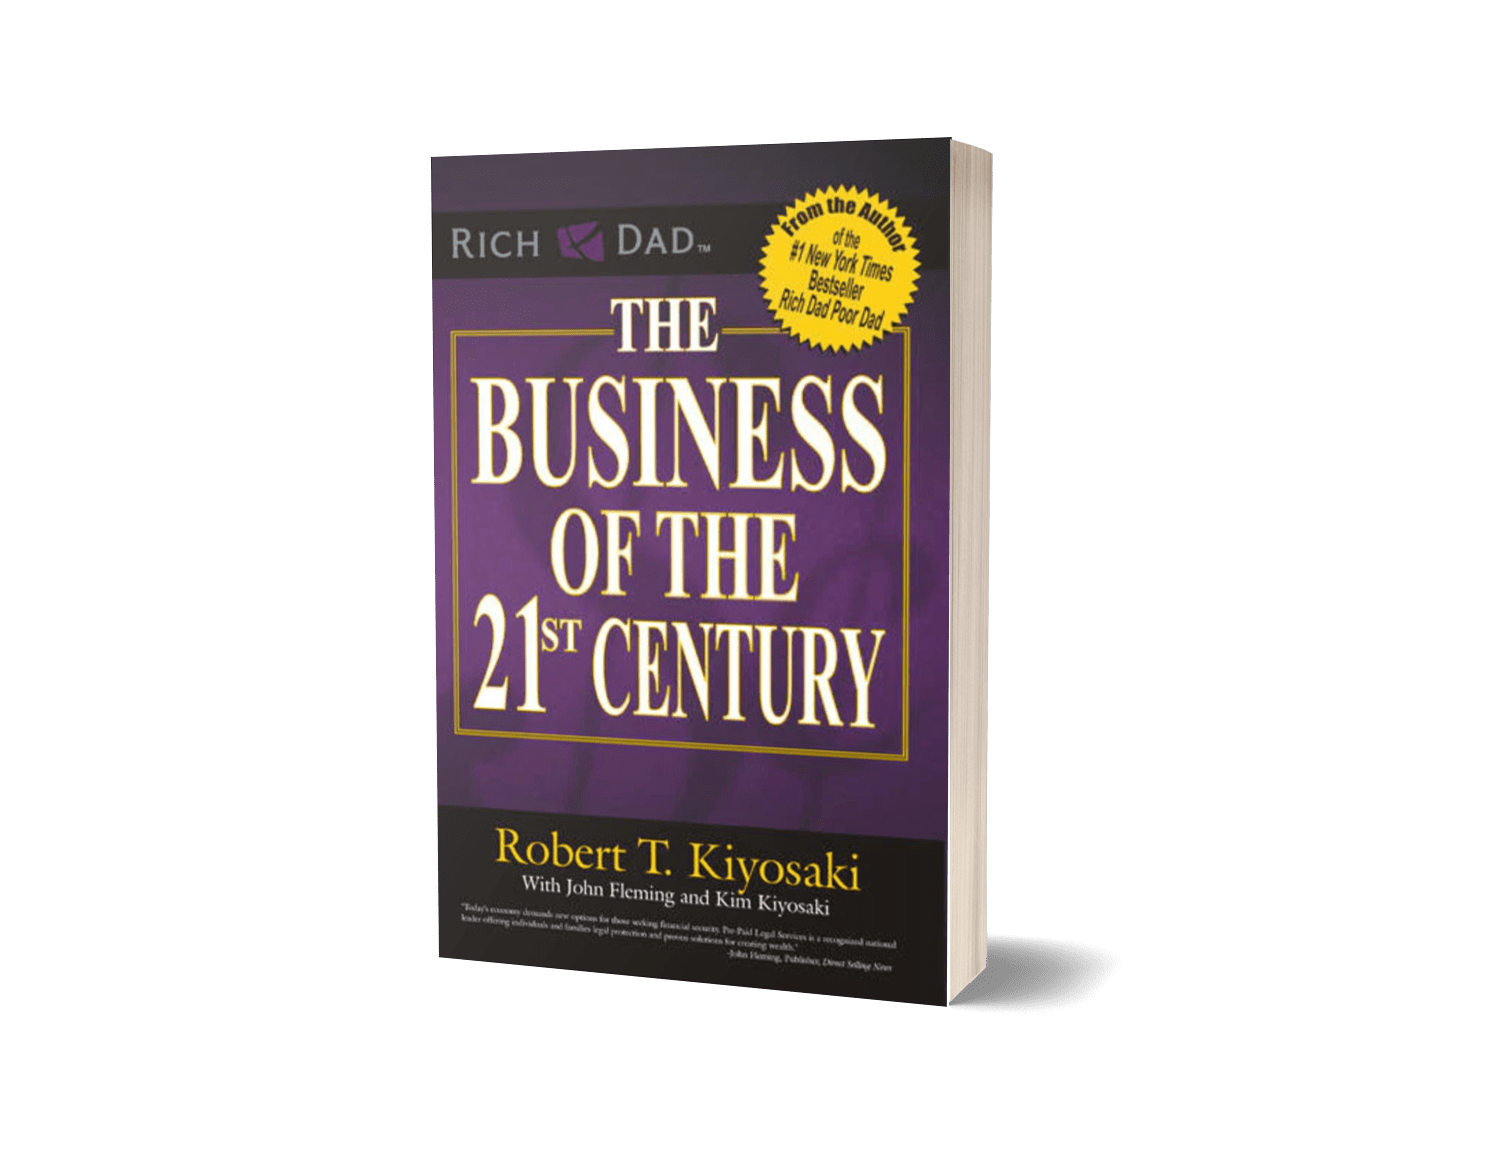 The Business of the 21st Century by Robert T. Kiyosaki